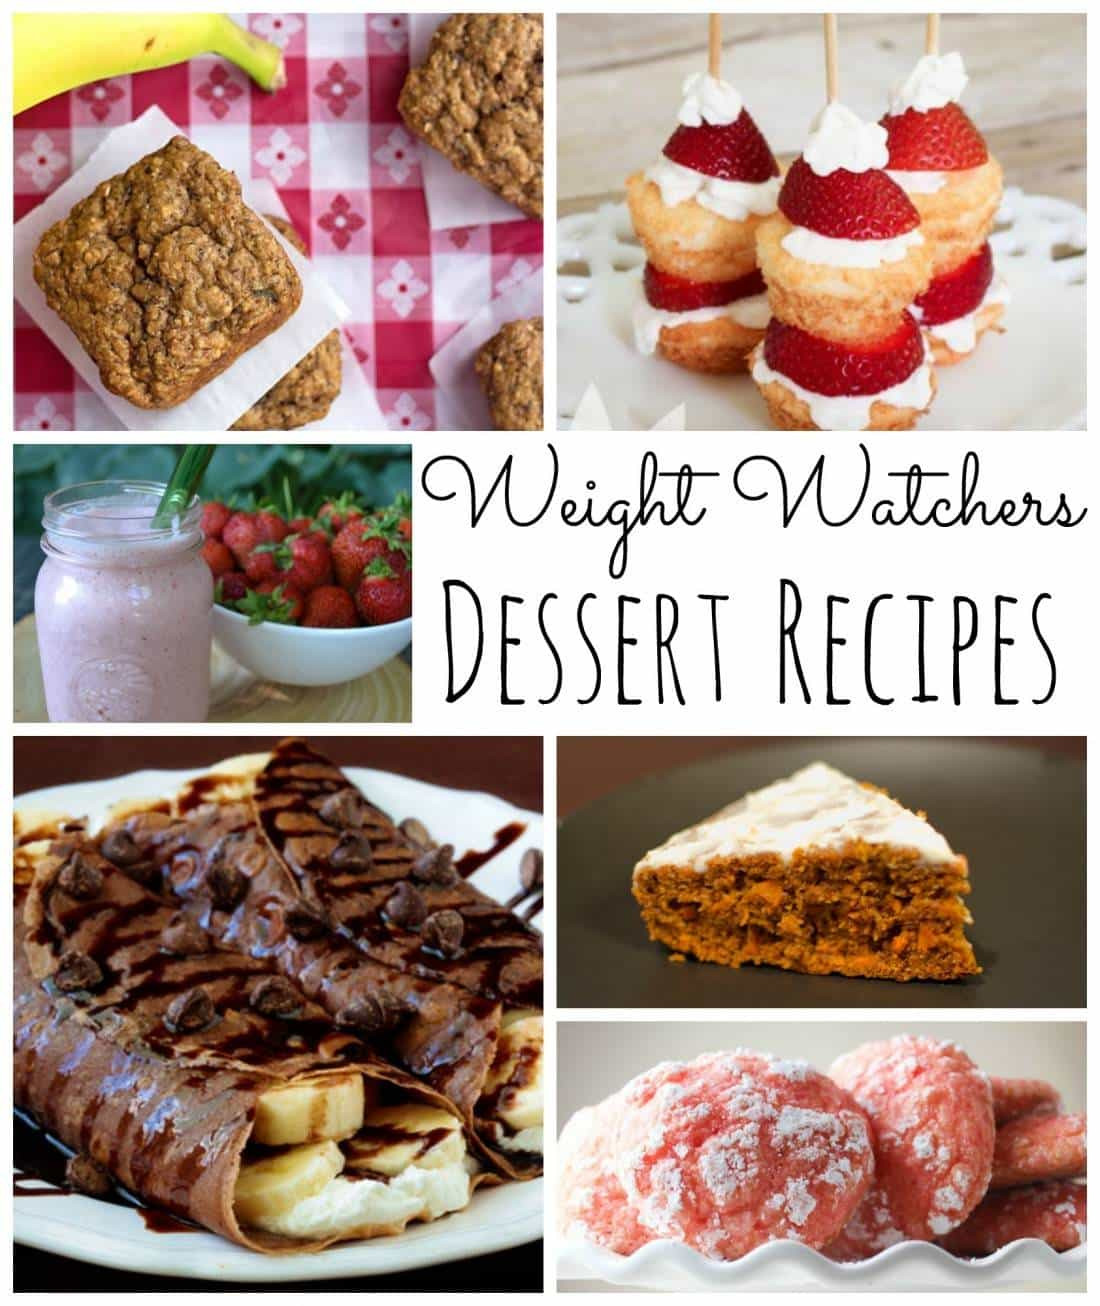 Best Weight Watchers Desserts
 The Best Weight Watcher Dessert Recipes